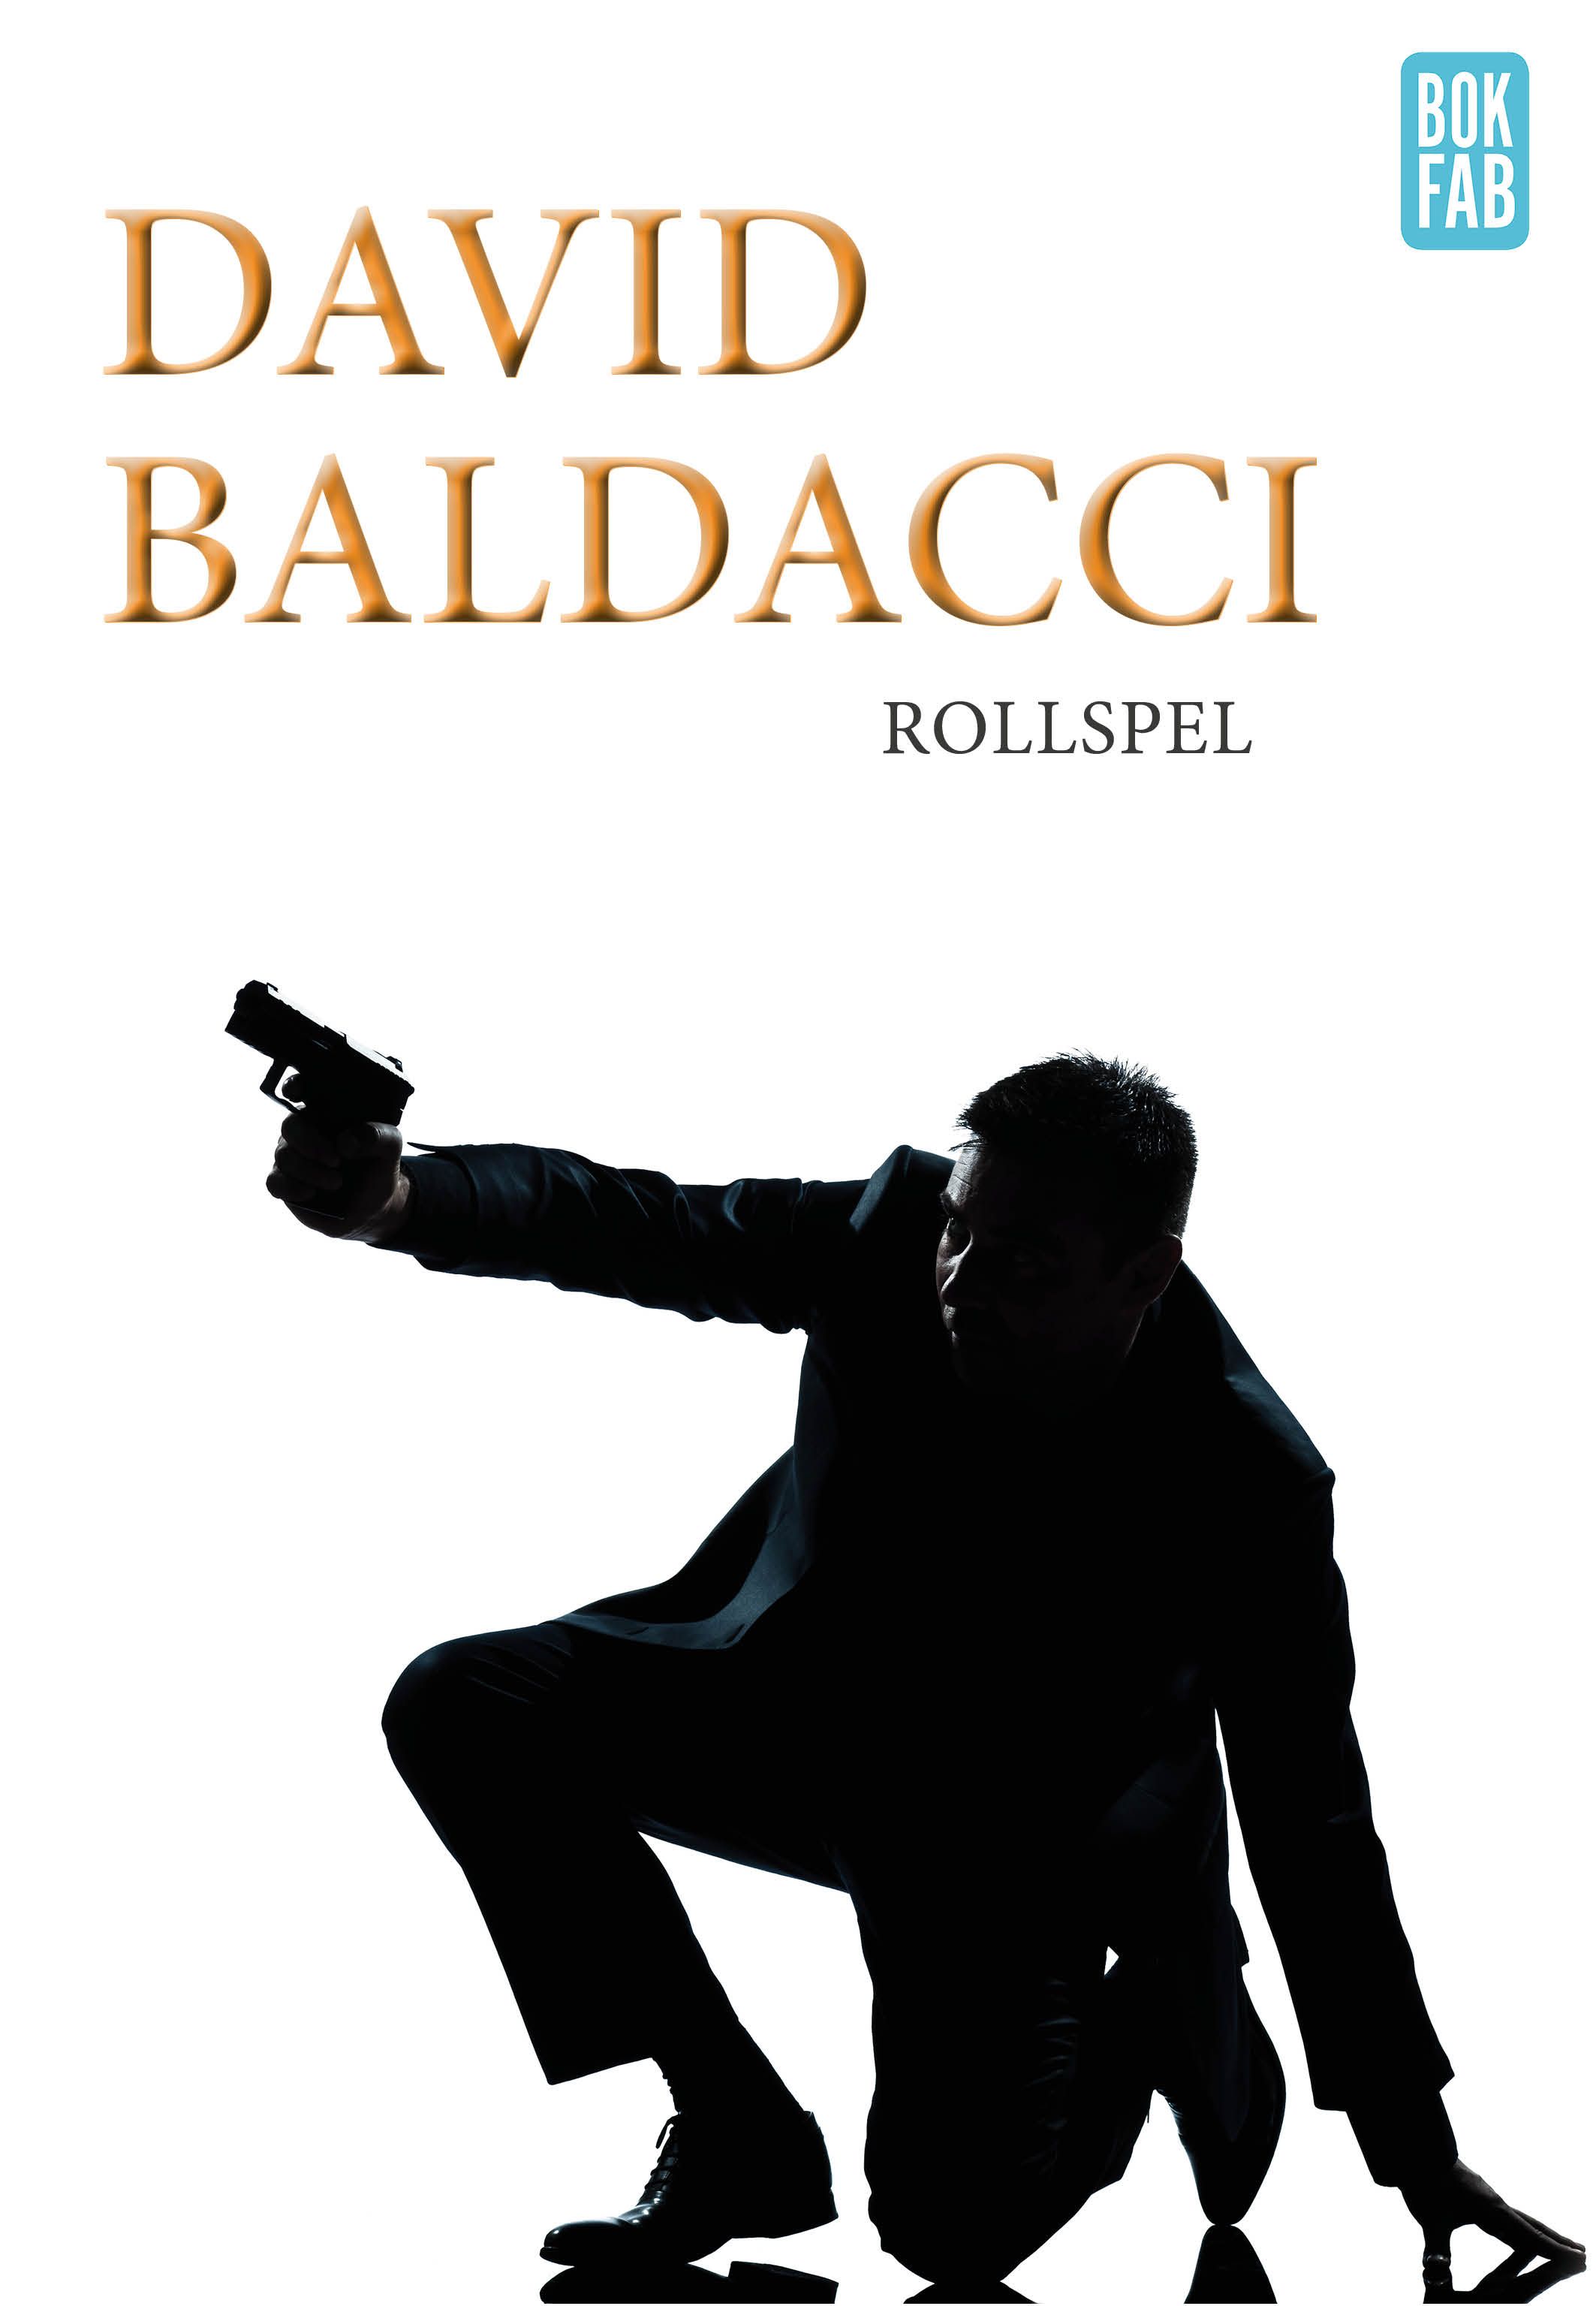 Rollspel, e-bok av David Baldacci